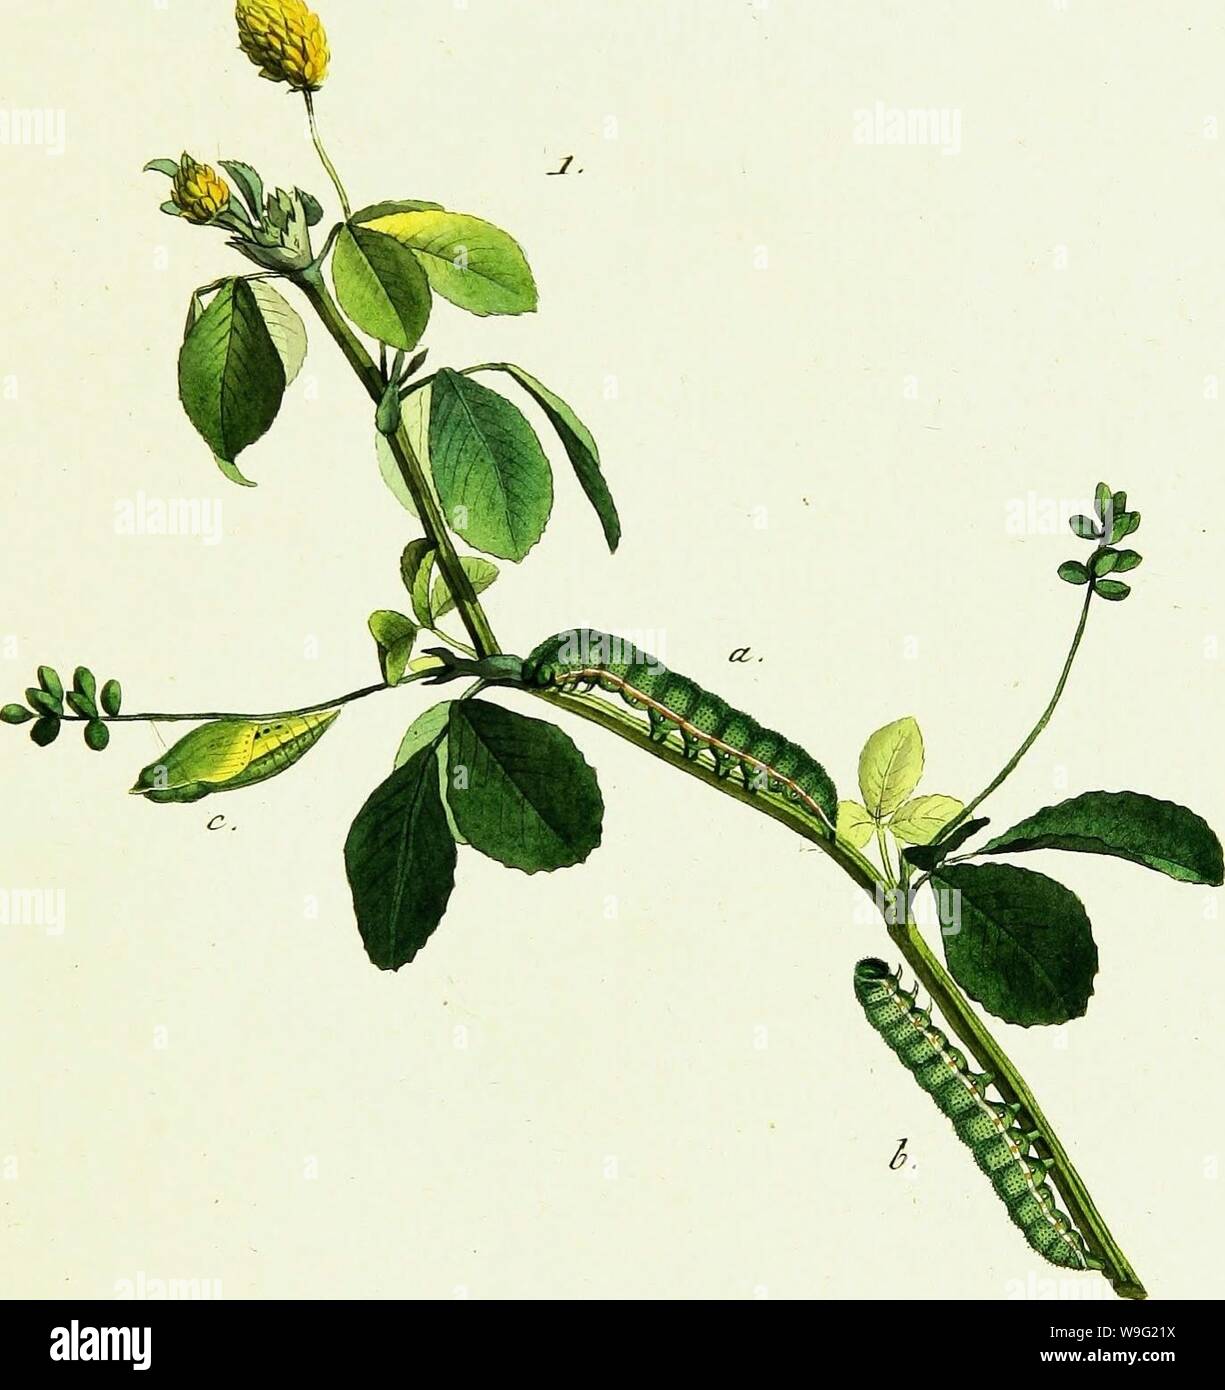 Immagine di archivio da pagina 94 del Geschichte europäischer Schmetterlinge (1806). Geschichte europäischer Schmetterlinge CUbiodiversity1742385-9607 Anno: 1806 ( -J-szrna-e . i-ytz- SRT. Foto Stock